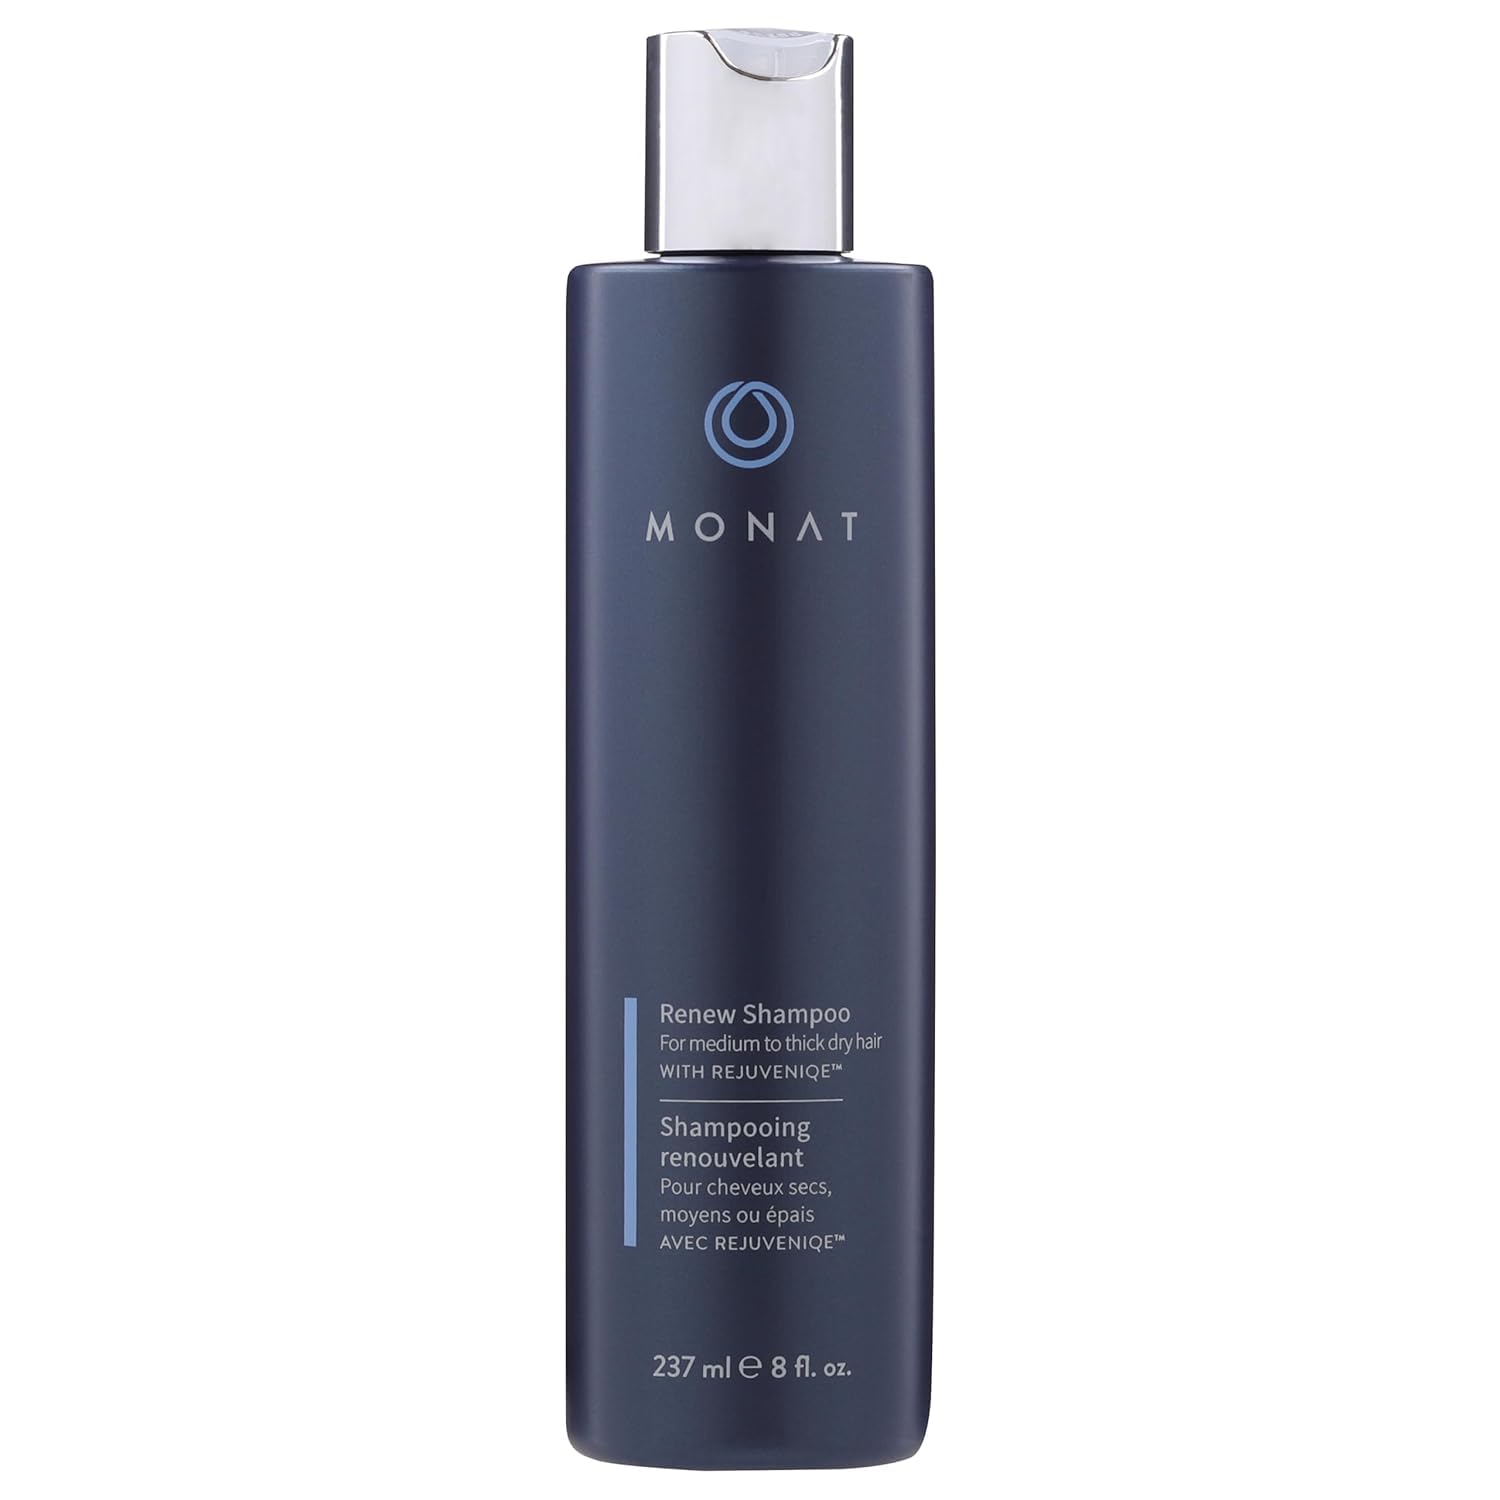 MONAT Renew™ Shampoo Infused with Rejuveniqe® - Moisturizing Shampoo w/Omega Fatty Acids for Medium to Thick Hair. Shine-enhancing, Ultra-hydrating Lather for Dry Hair - Net Wt. 237 ml / 8.0 fl. oz